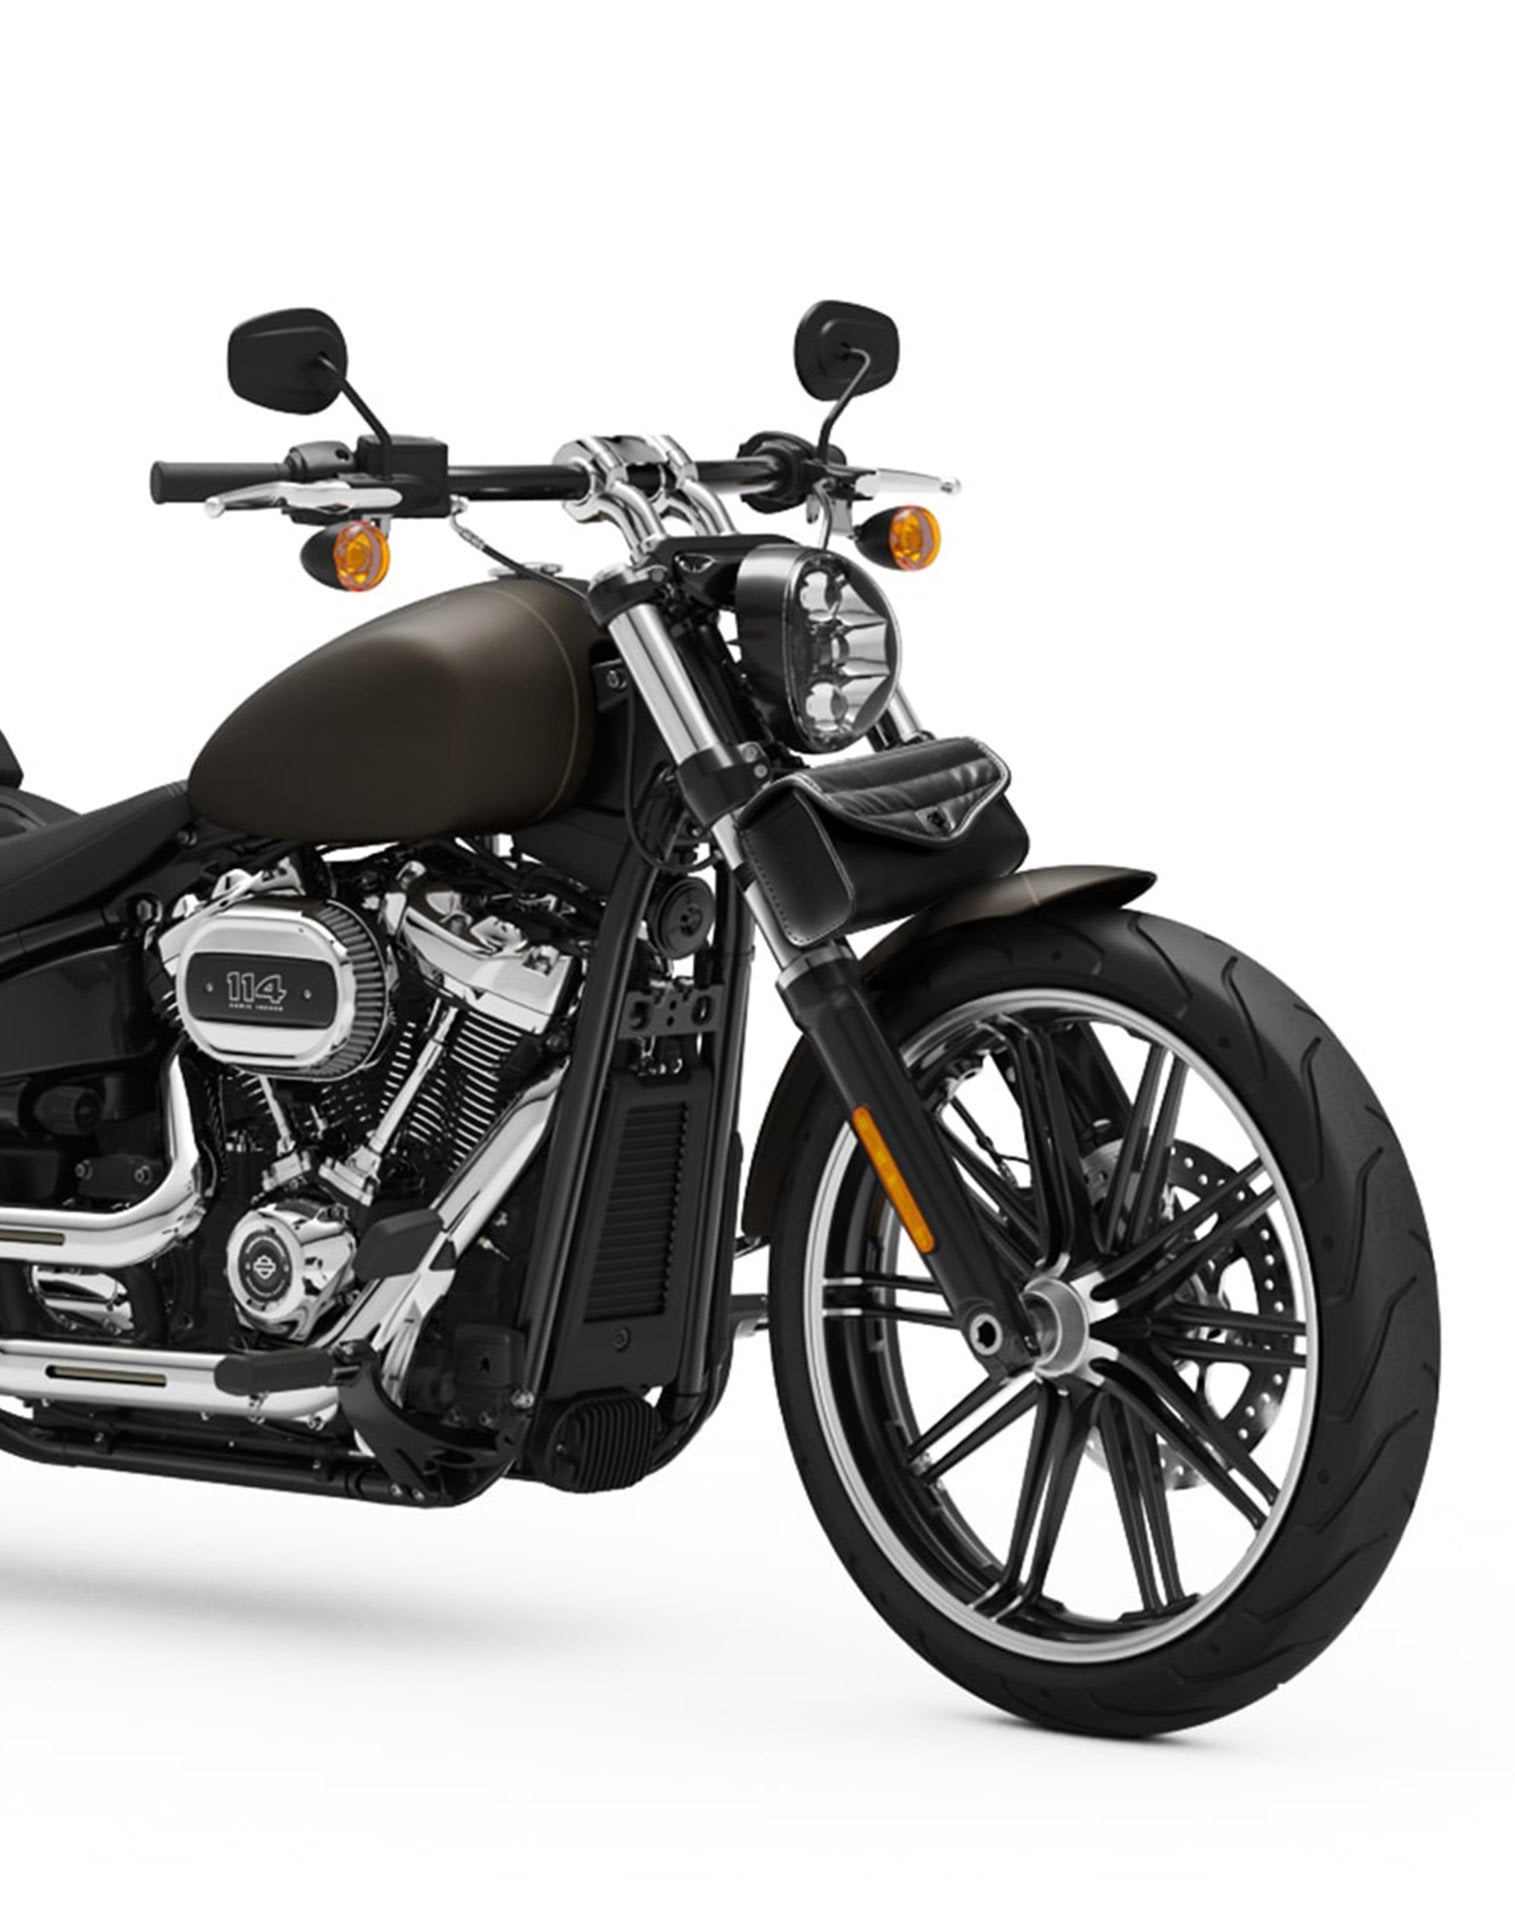 Viking Iron Born Horizontal Stitch Leather Motorcycle Tool Bag for Harley Davidson Close Up View